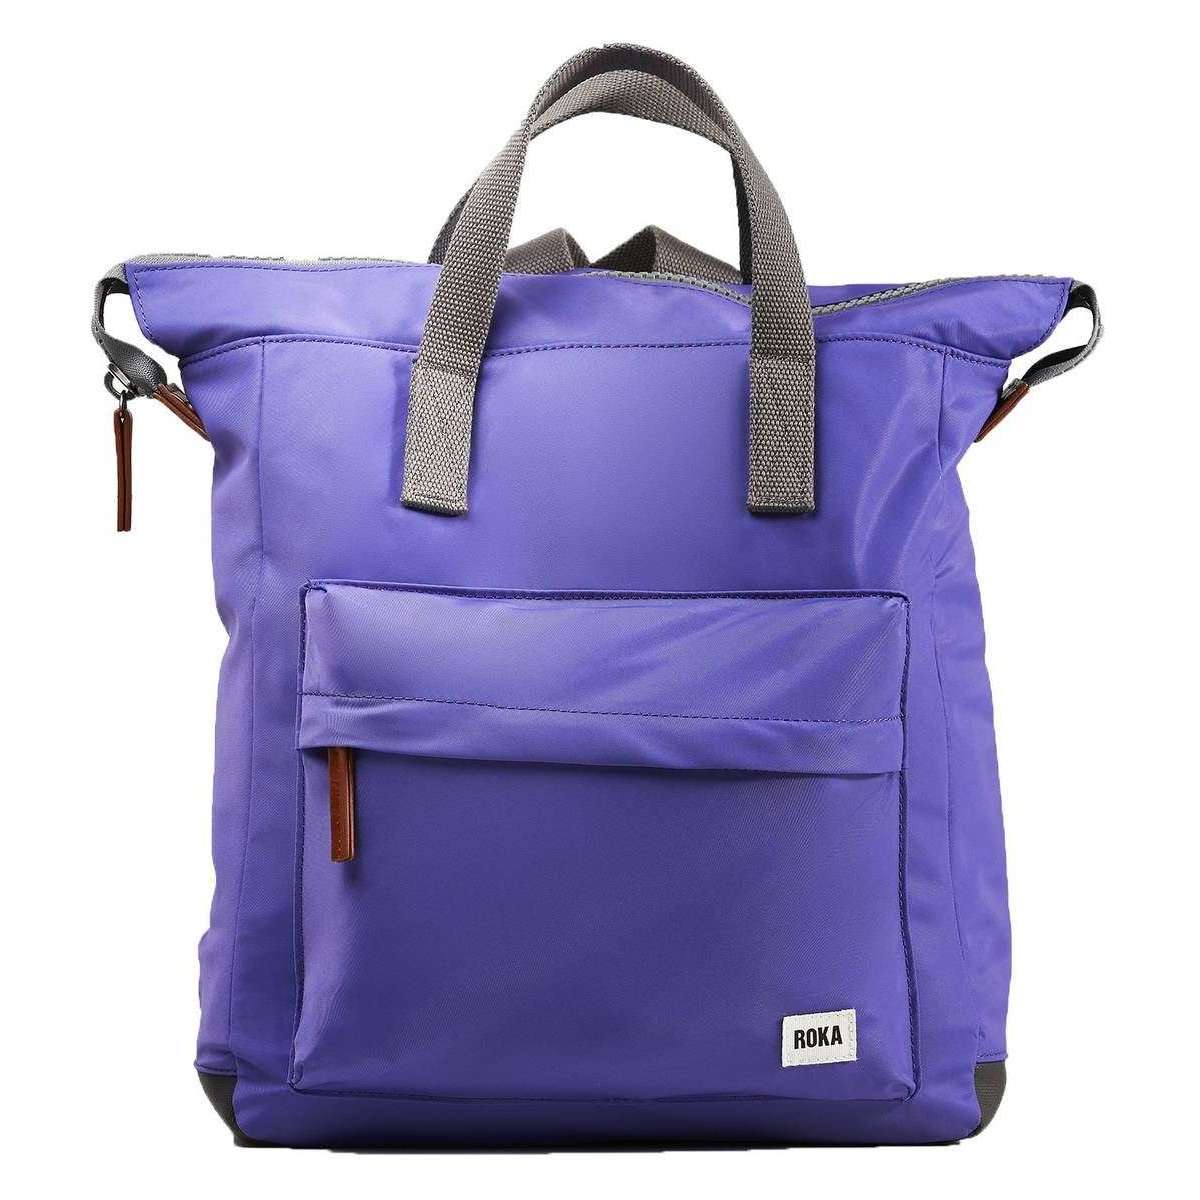 Roka Bantry B Medium Sustainable Nylon Backpack - Peri Purple